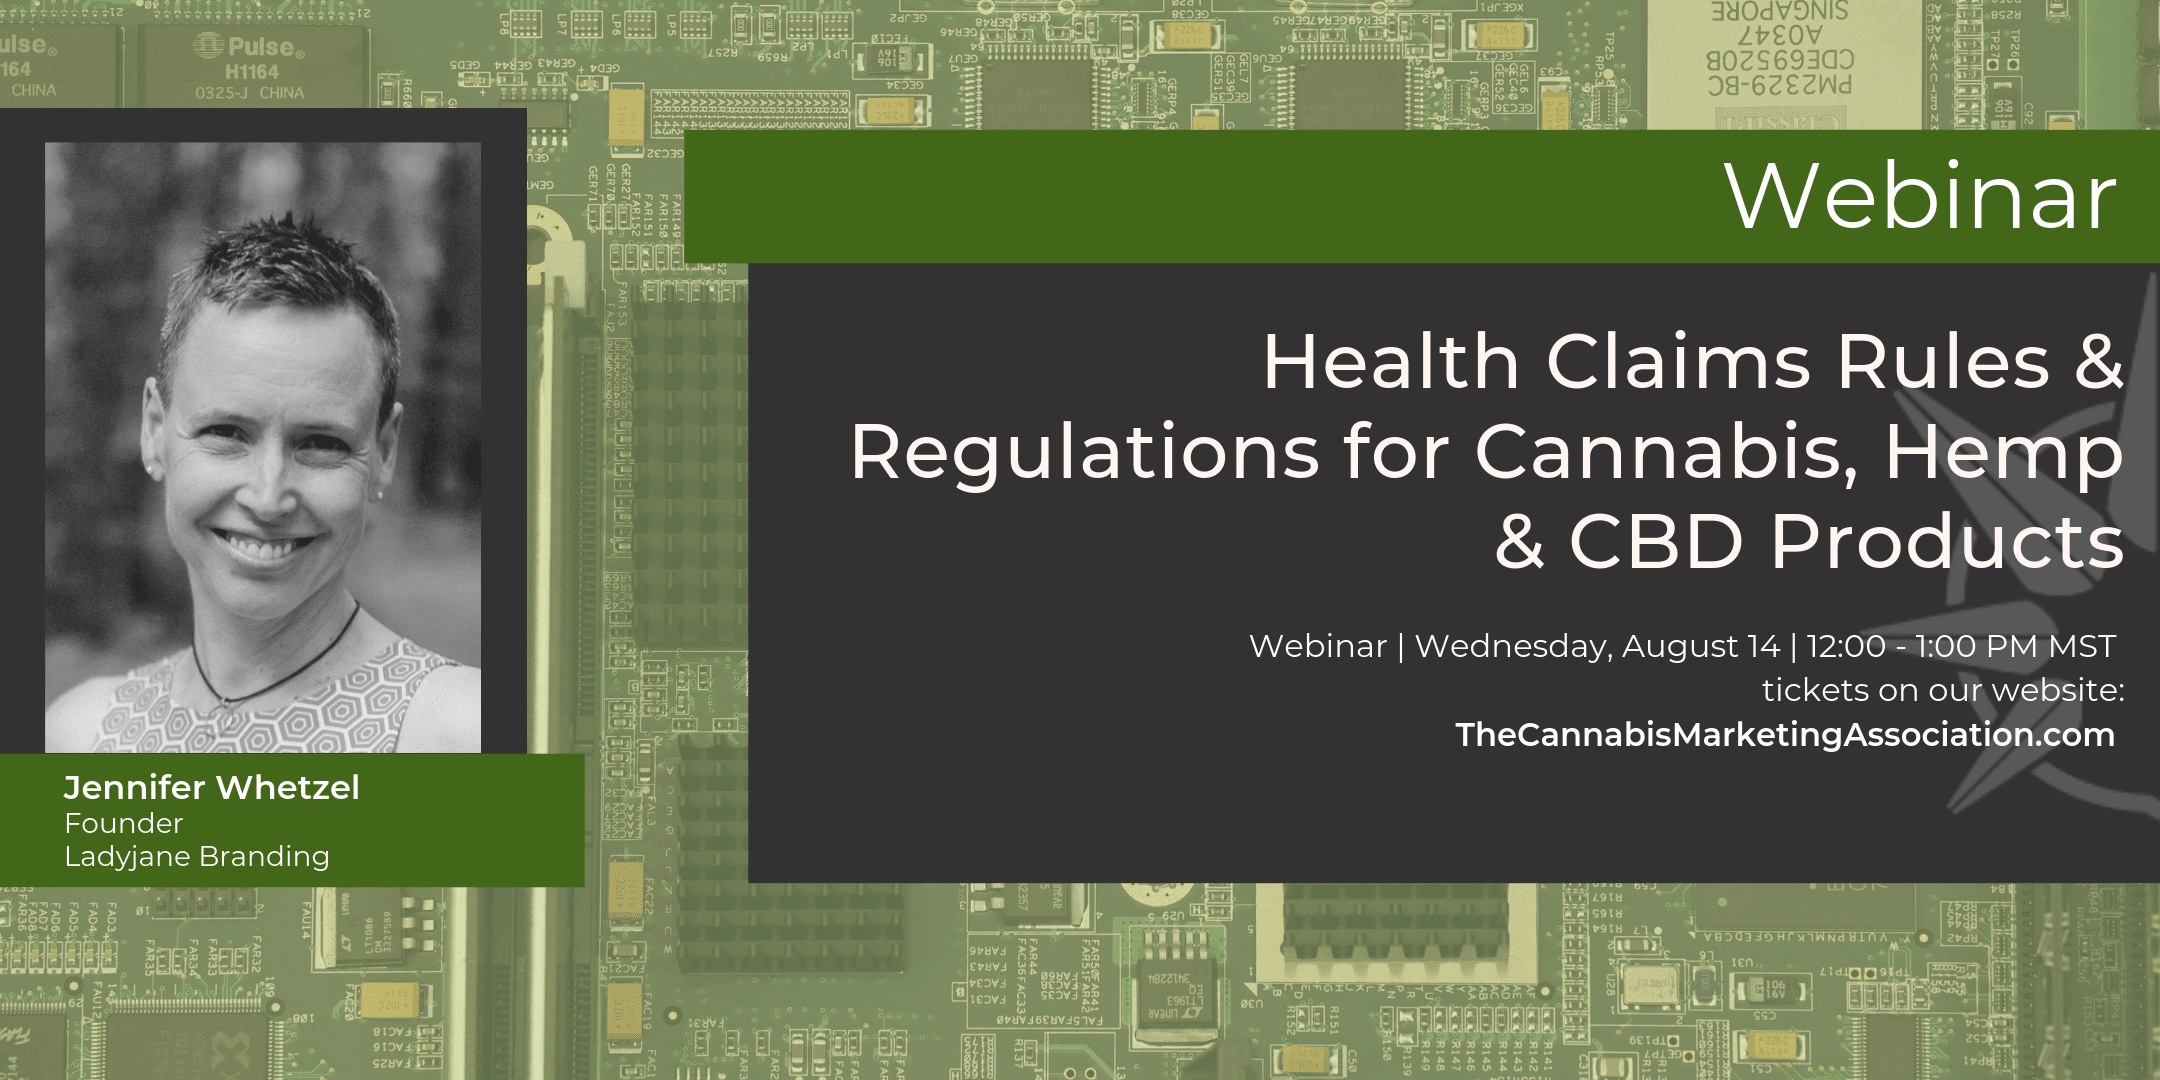 Health Claim Rules & Regulations for Cannabis, Hemp & CBD Products